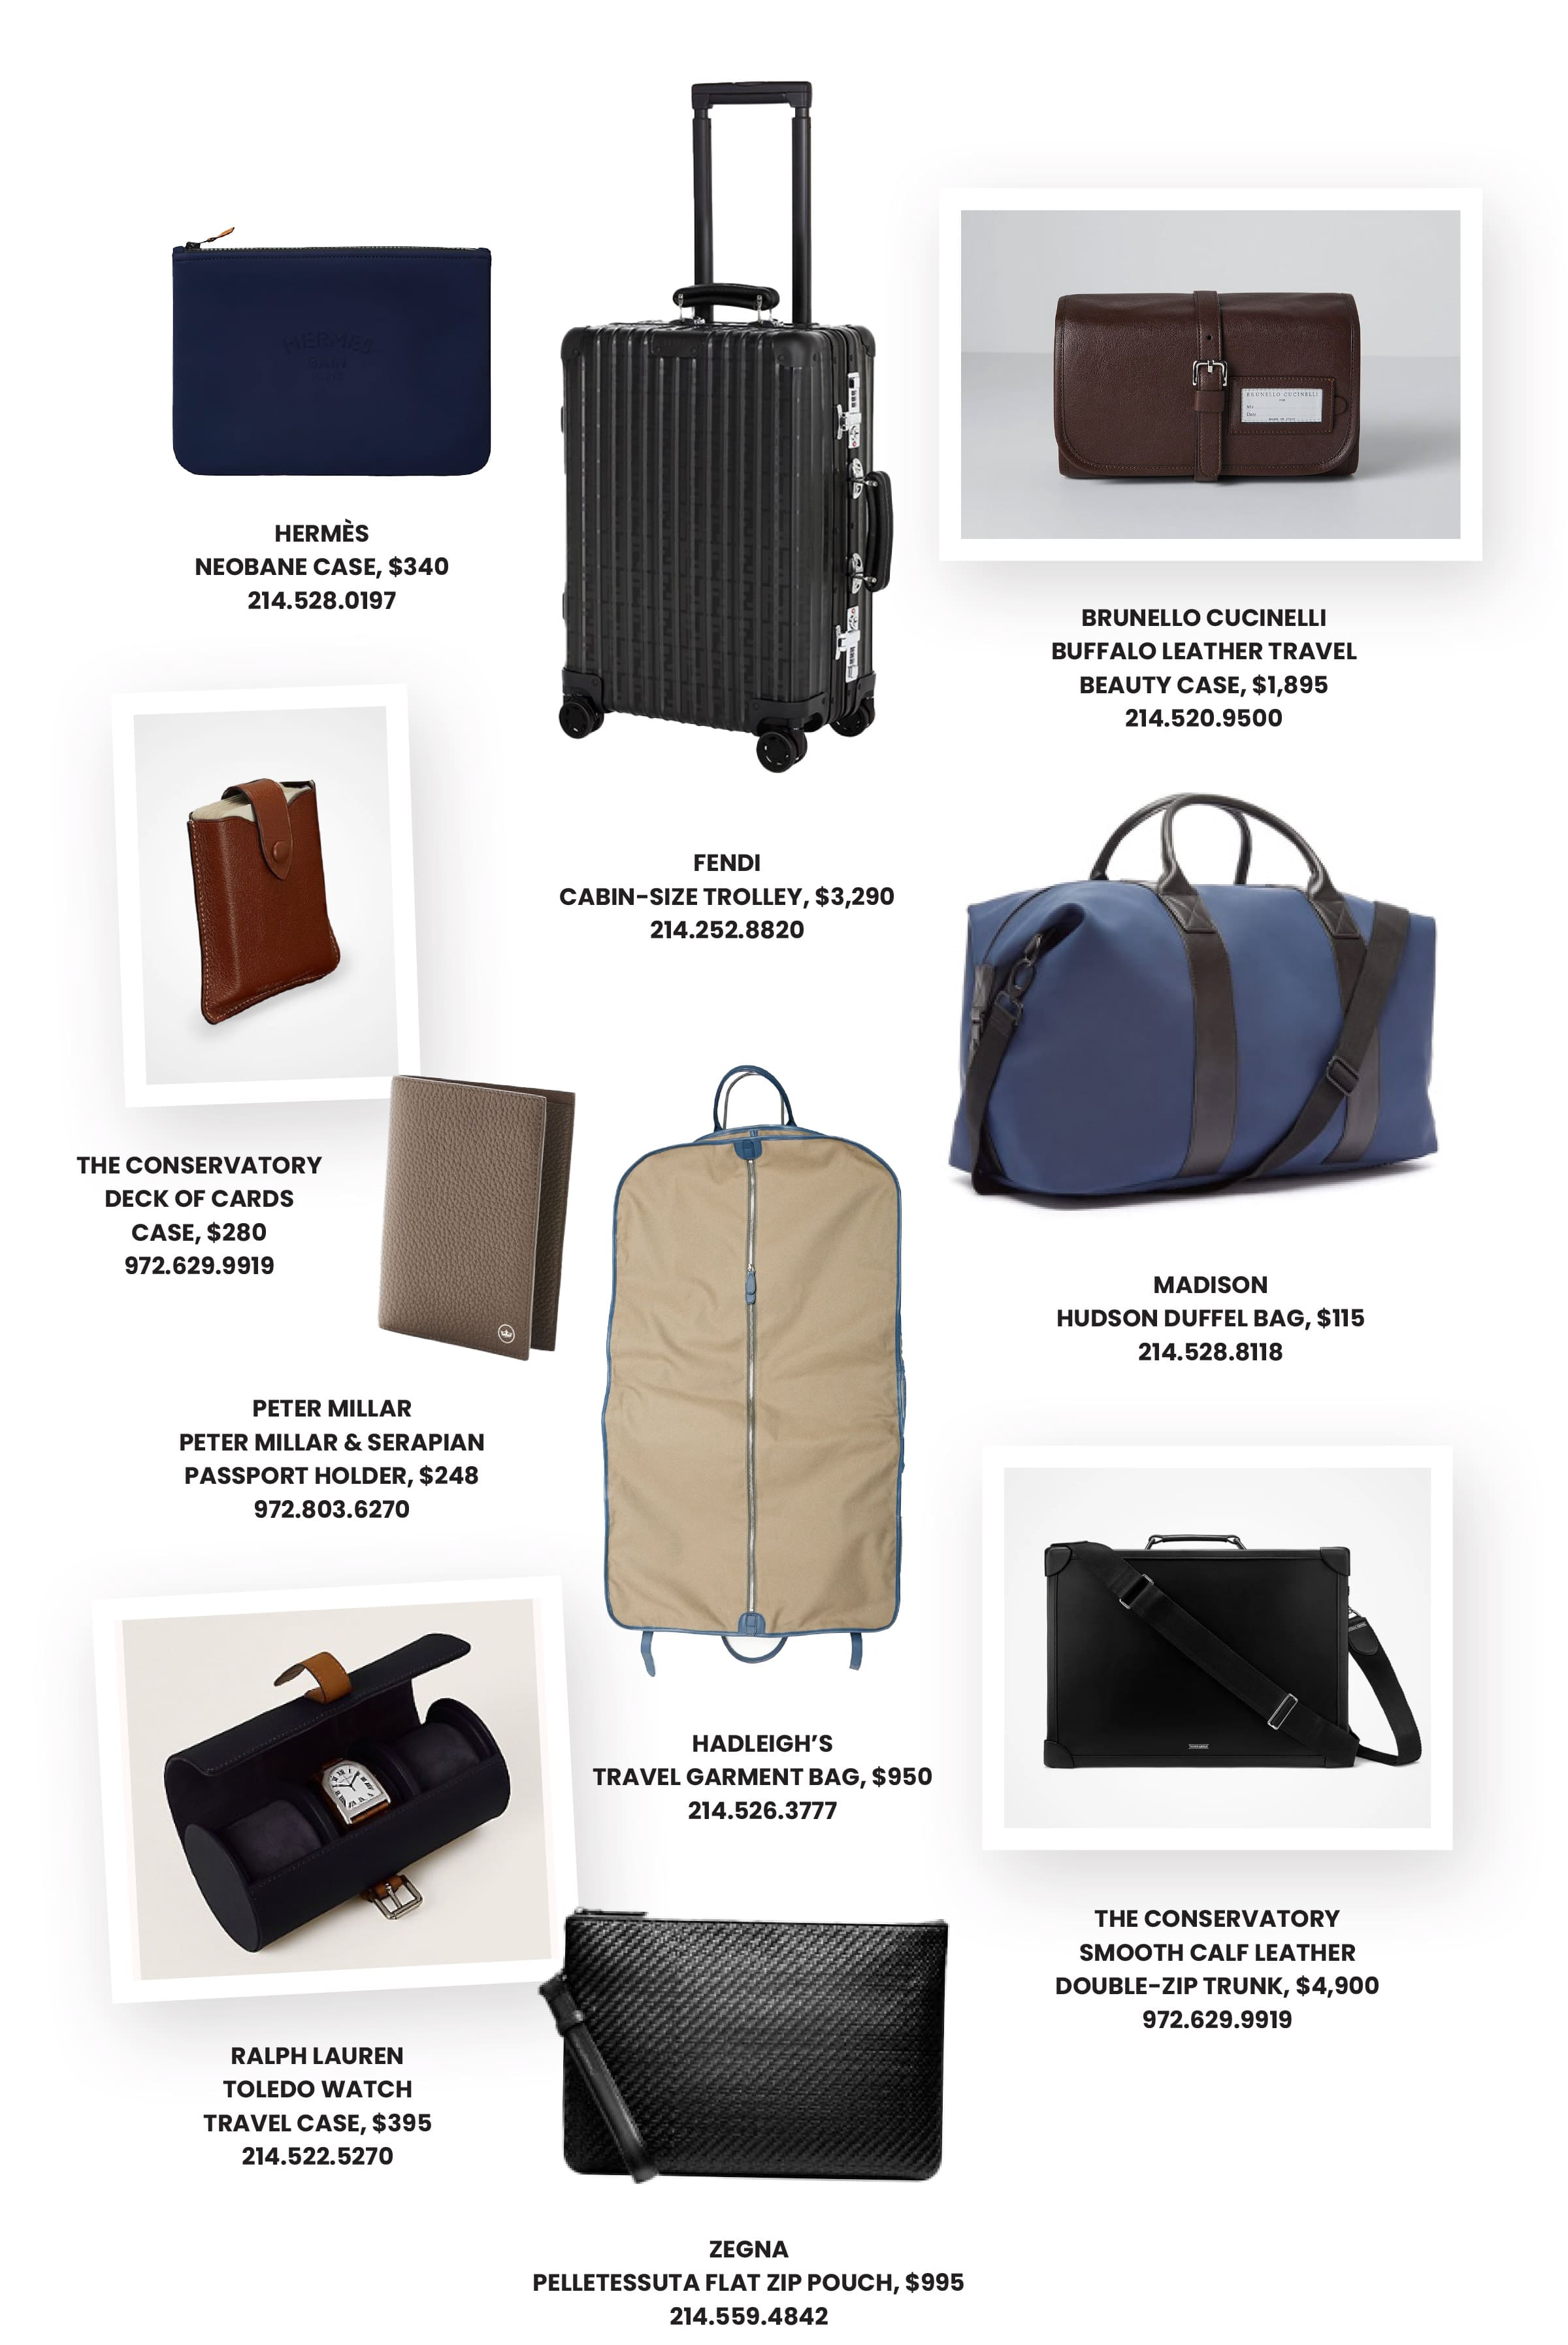 Travel essentials for him featuring a Fendi suitcase, Hadleigh’s garment bag, designer duffel bag and Peter Millar passport case.